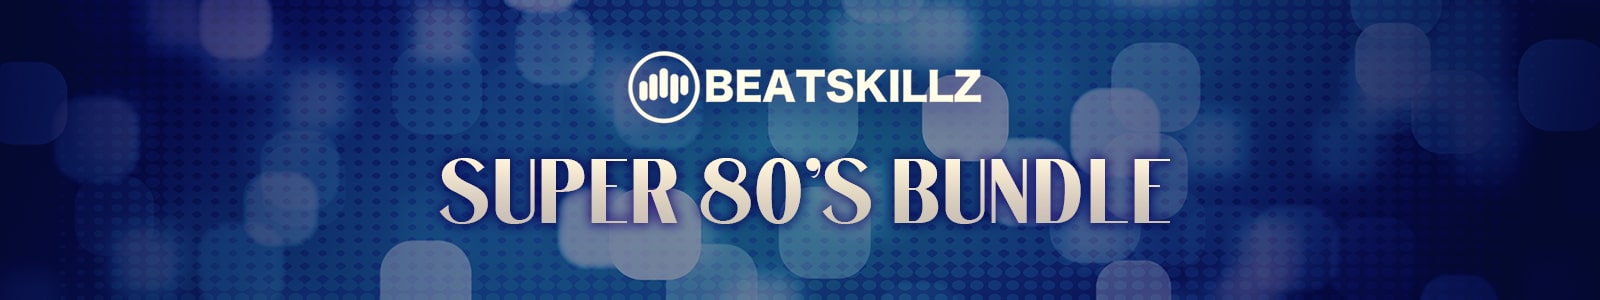 beatskillz super 80s bundle